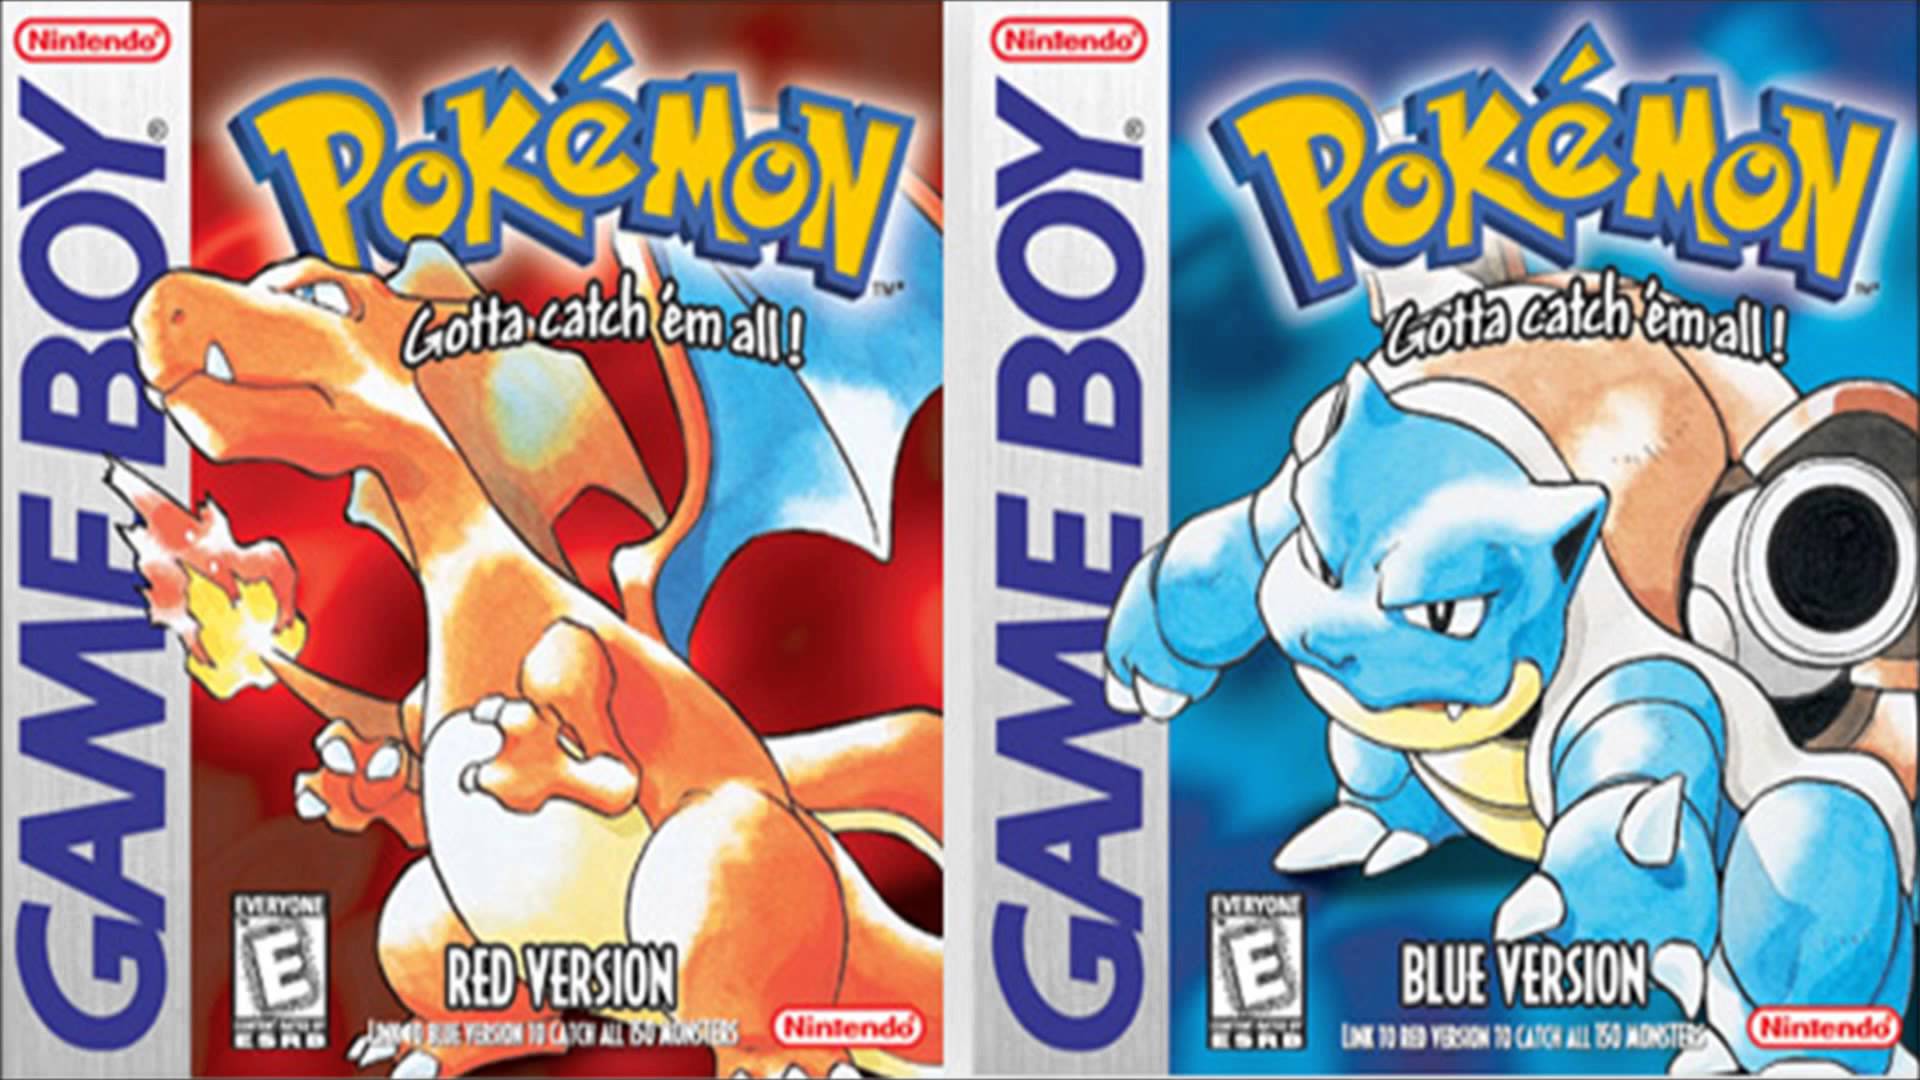 Jap game. Pokemon игра Блу. Pokemon Red and Green игра. Покемоны в играх ред и Блю. Pokemon Red Version и Blue Version.